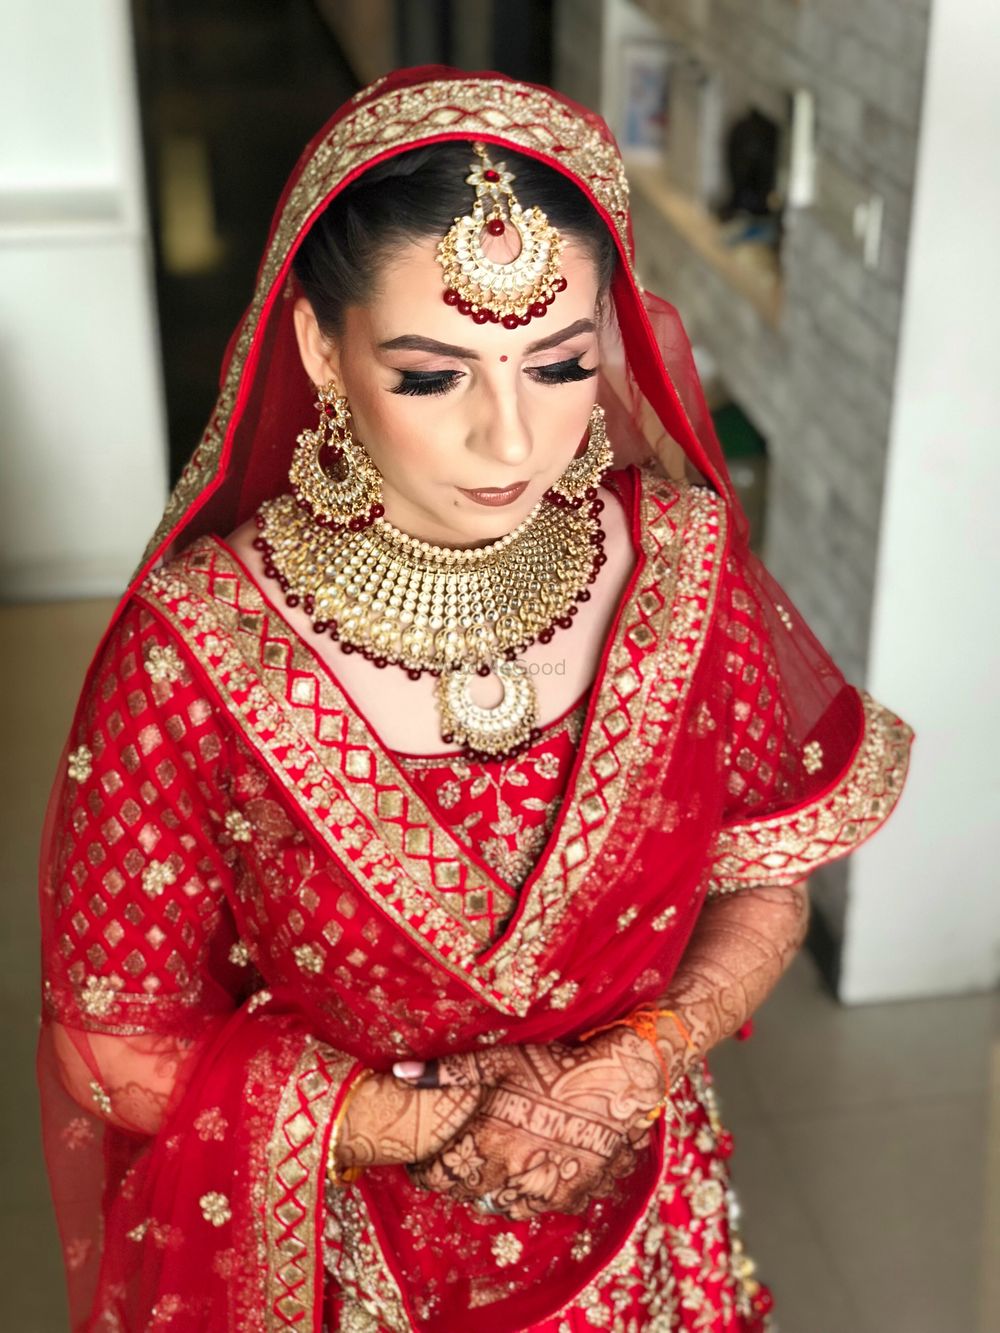 Photo By Rachit Lavanya Makeovers - Bridal Makeup